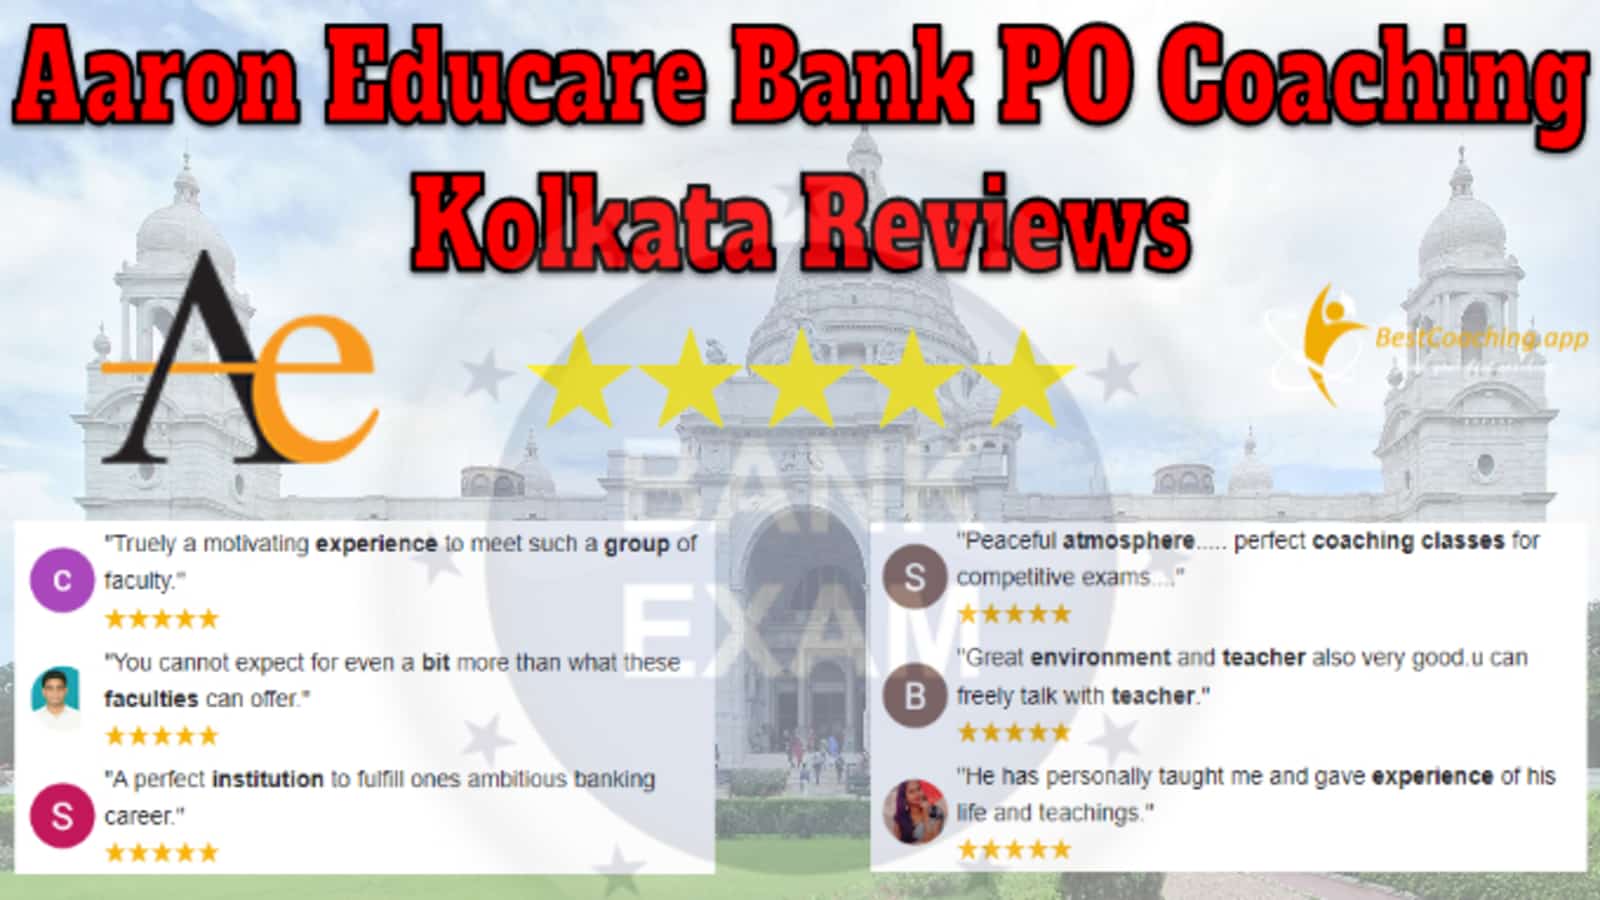 Aaron Educare Bank PO Coaching Kolkata Reviews